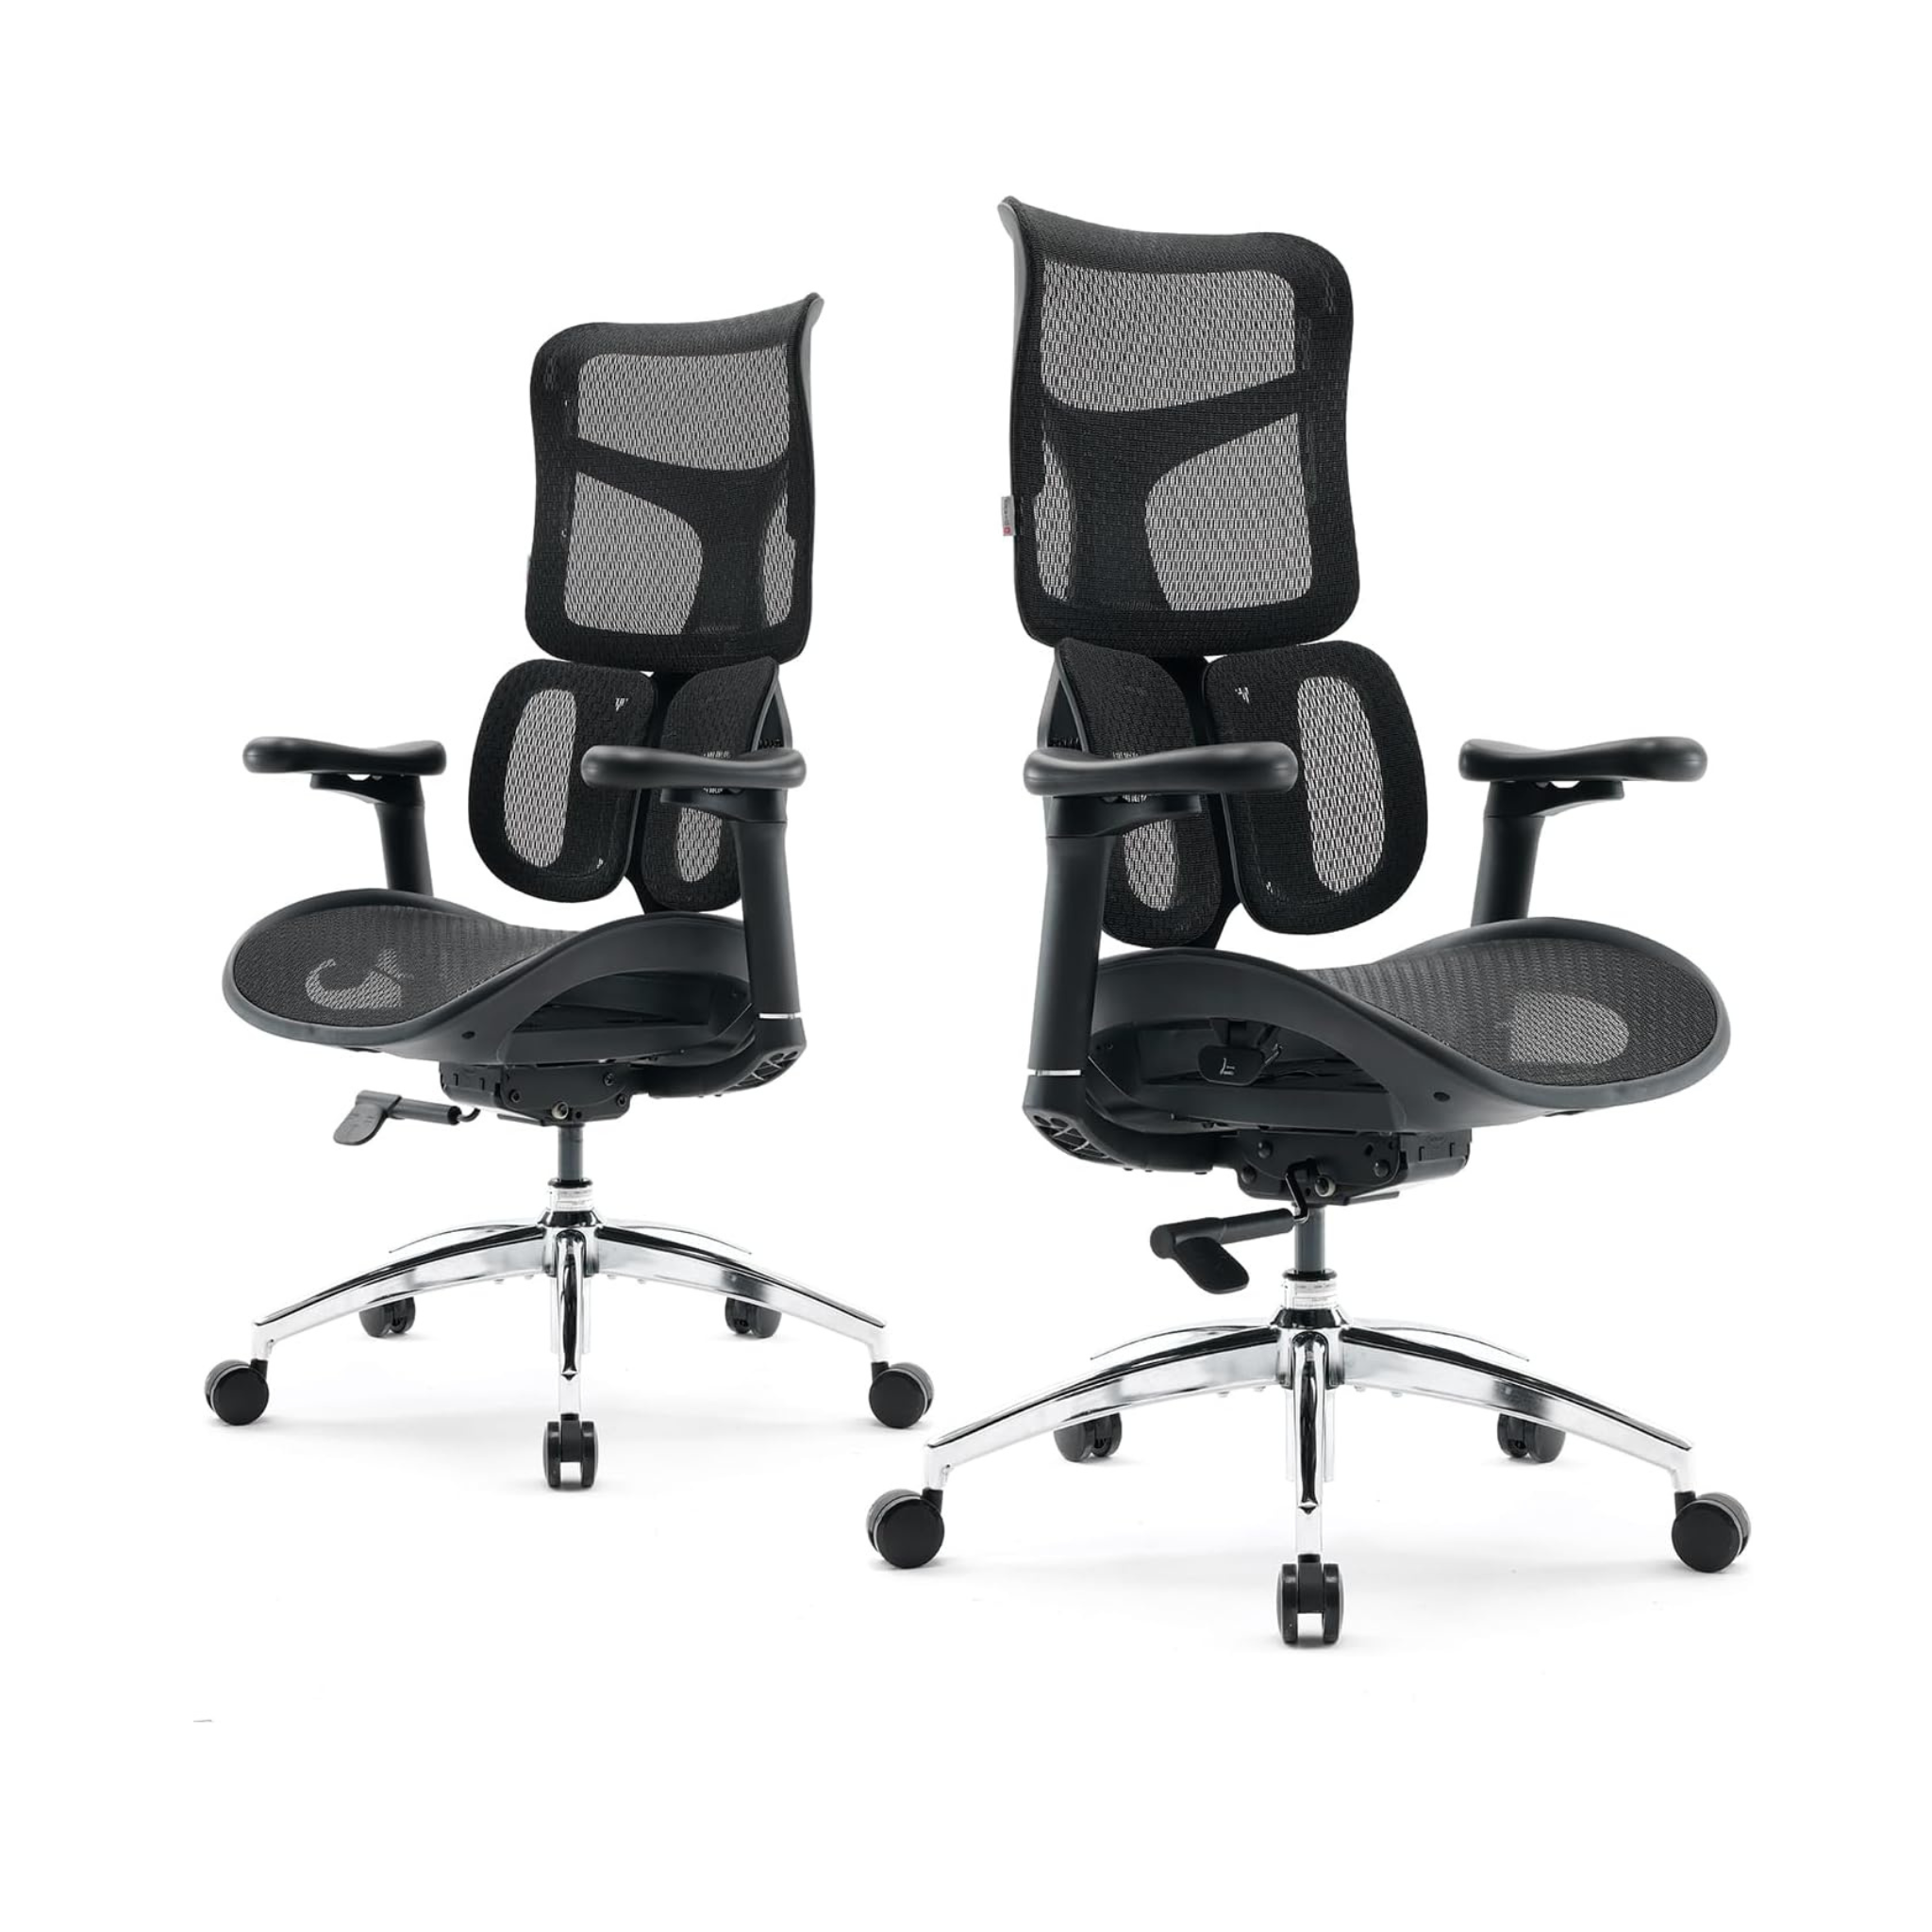 Sihoo Doro S100 Ergonomic Office Chair w/ Dual Dynamic Lumbar Support